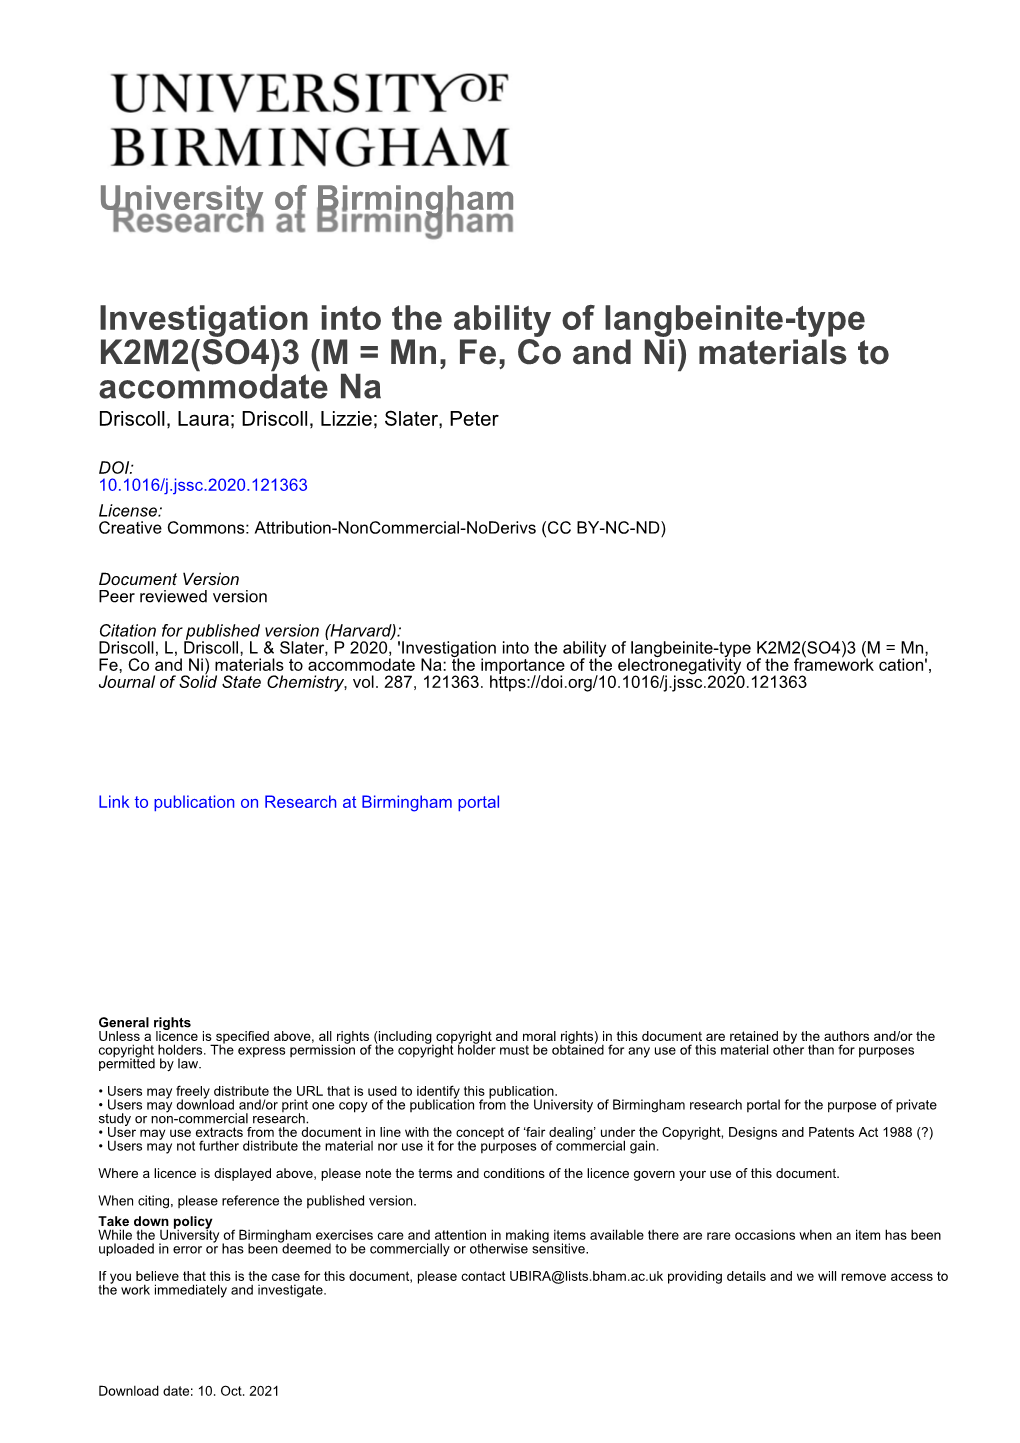 University of Birmingham Investigation Into the Ability of Langbeinite